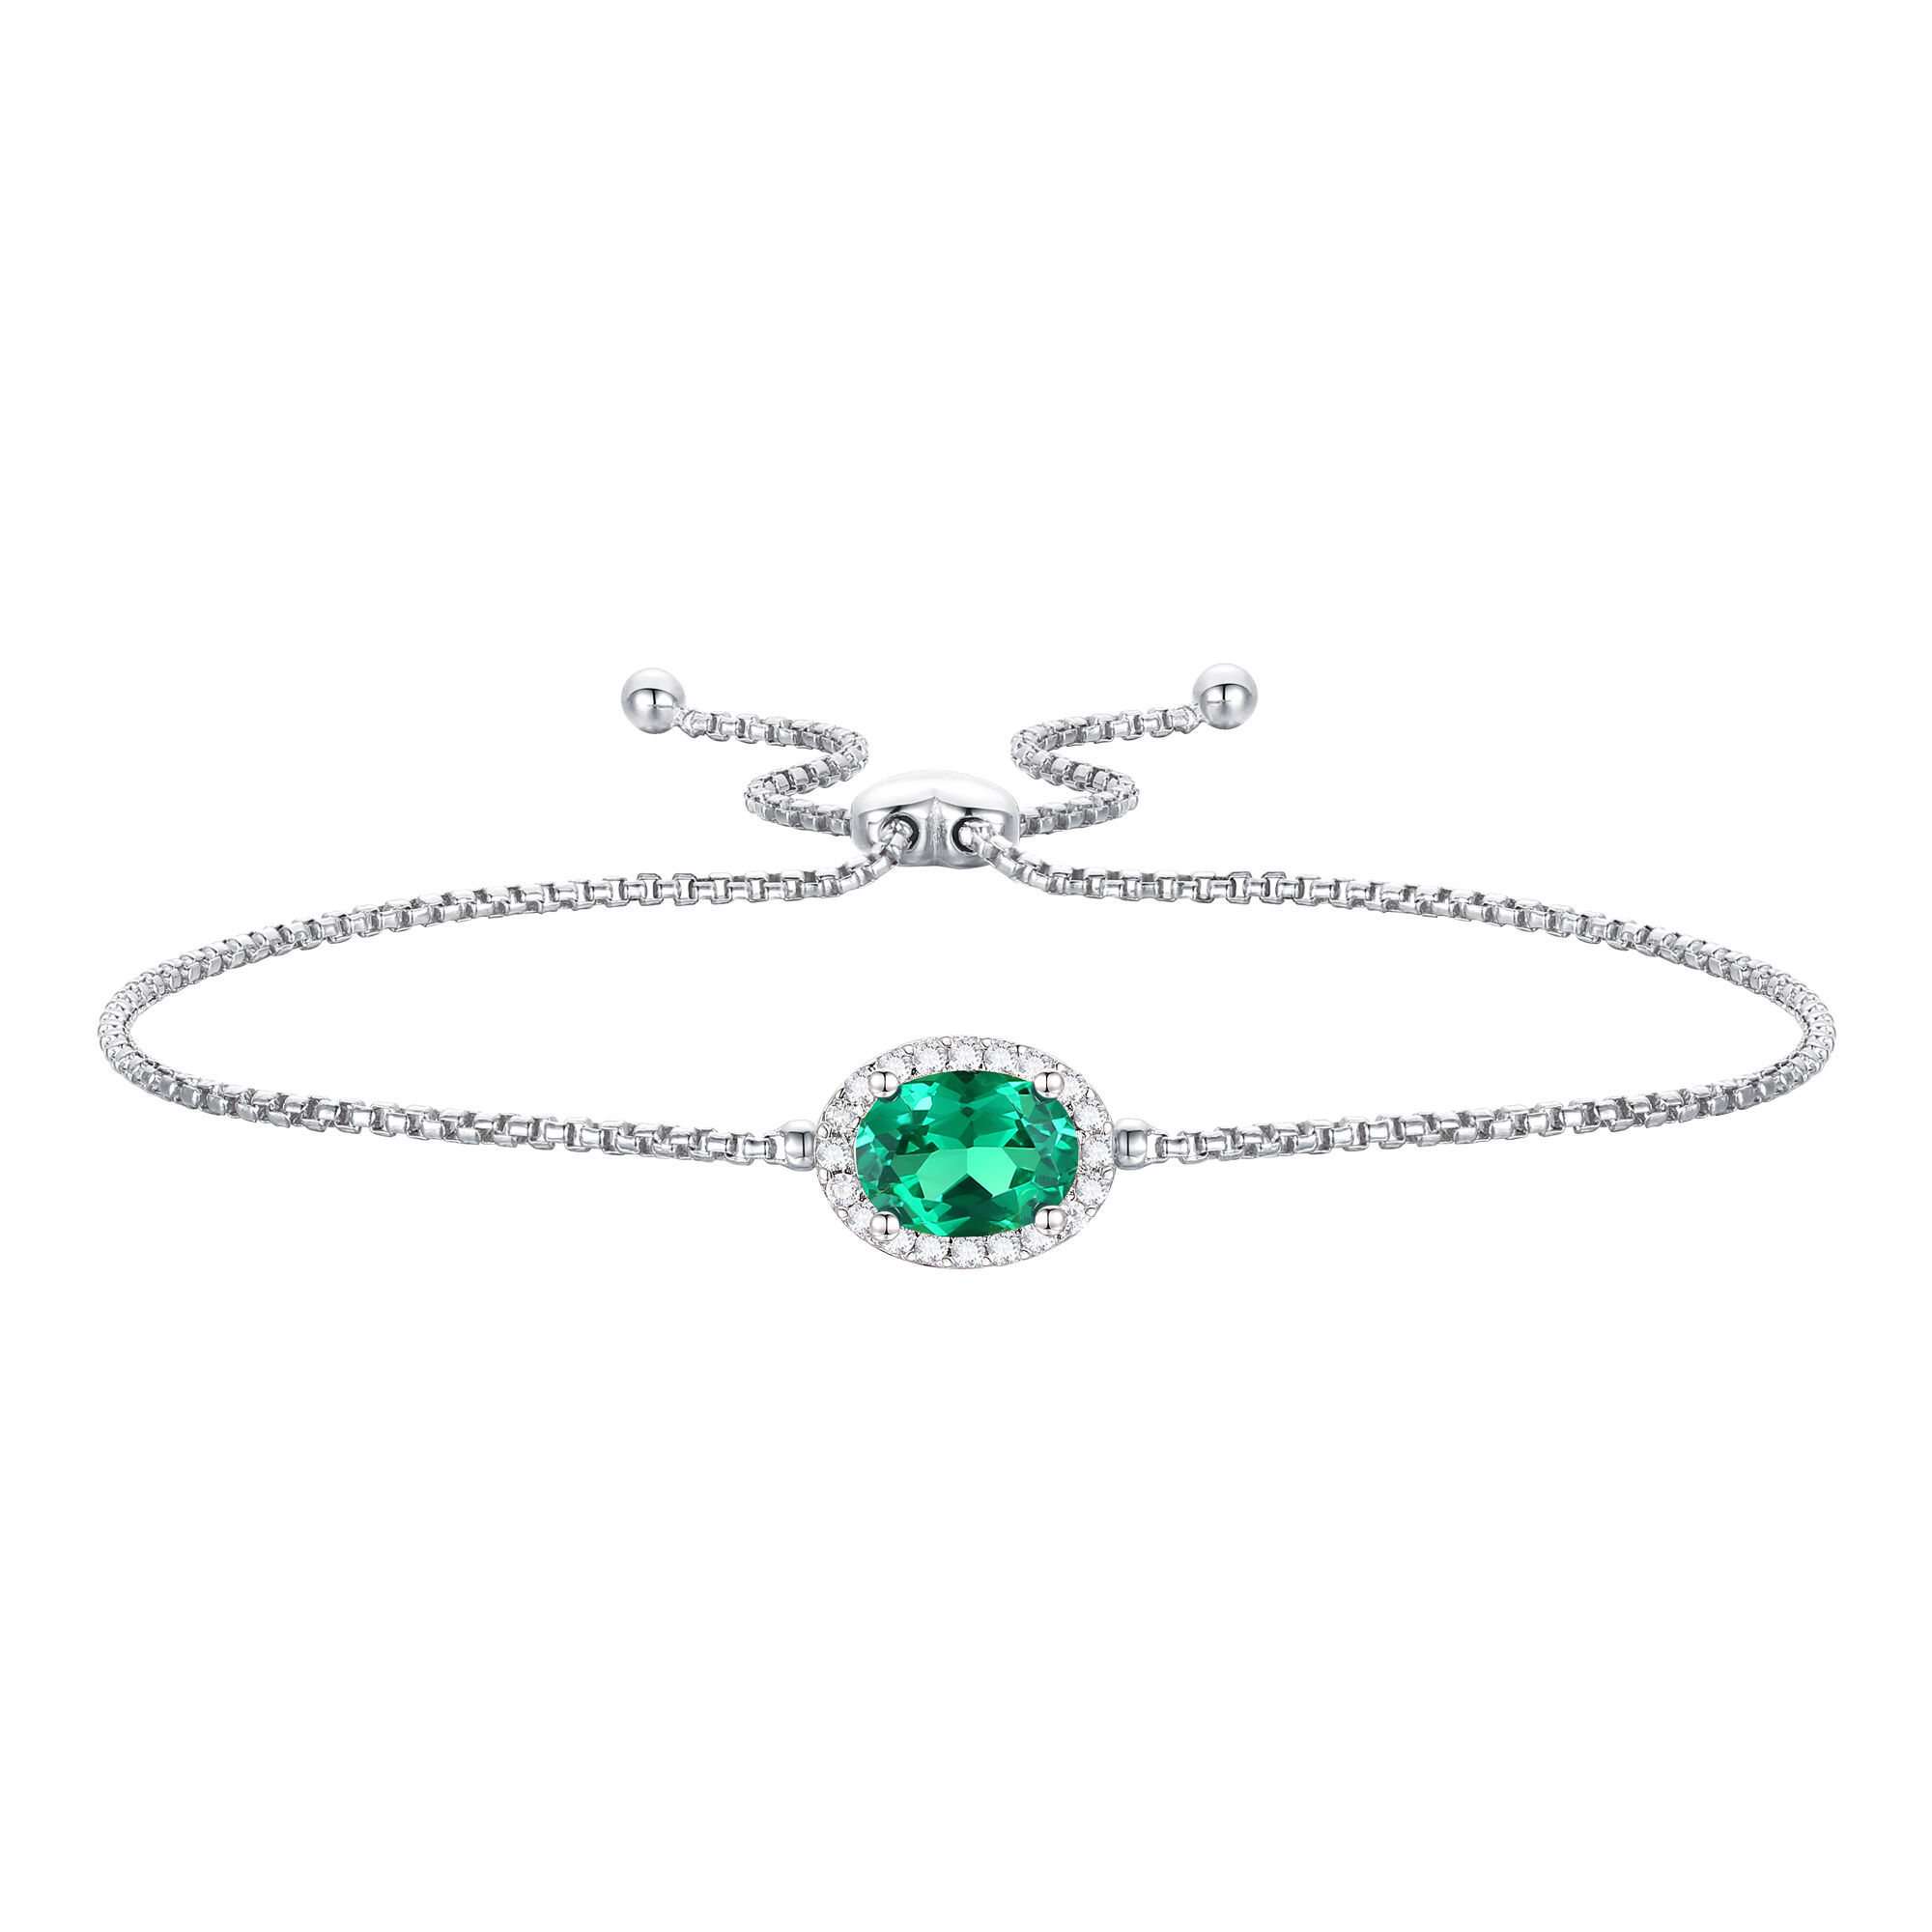 Irish Celtic Trinity Knot Bracelet with Green Cubic Zirconia Beads